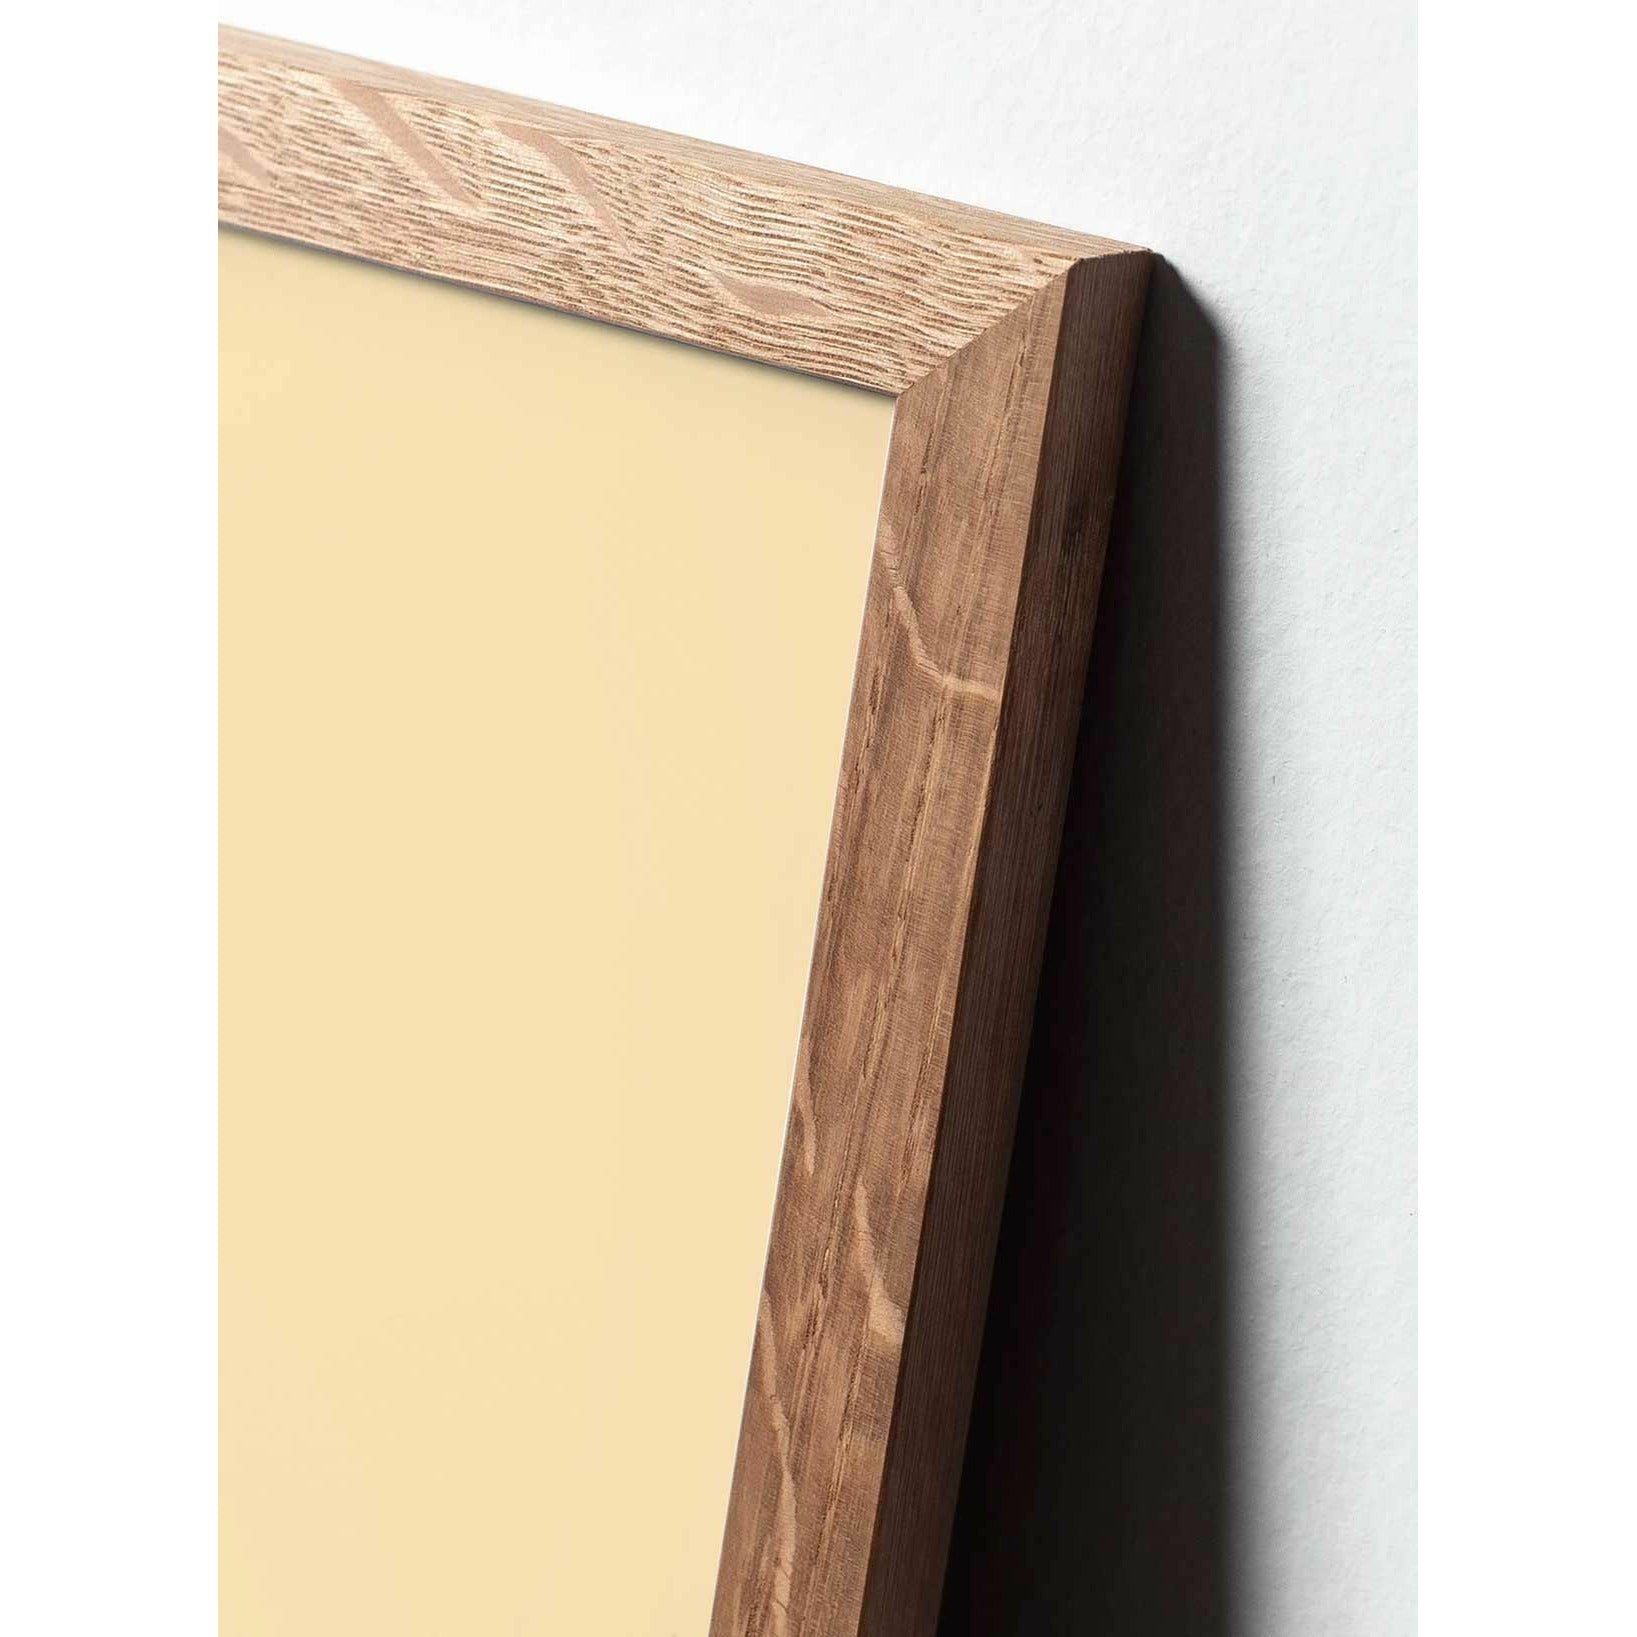 Póster de formato de cruce de huevo de creación, marco hecho de madera clara de 30x40 cm, marrón